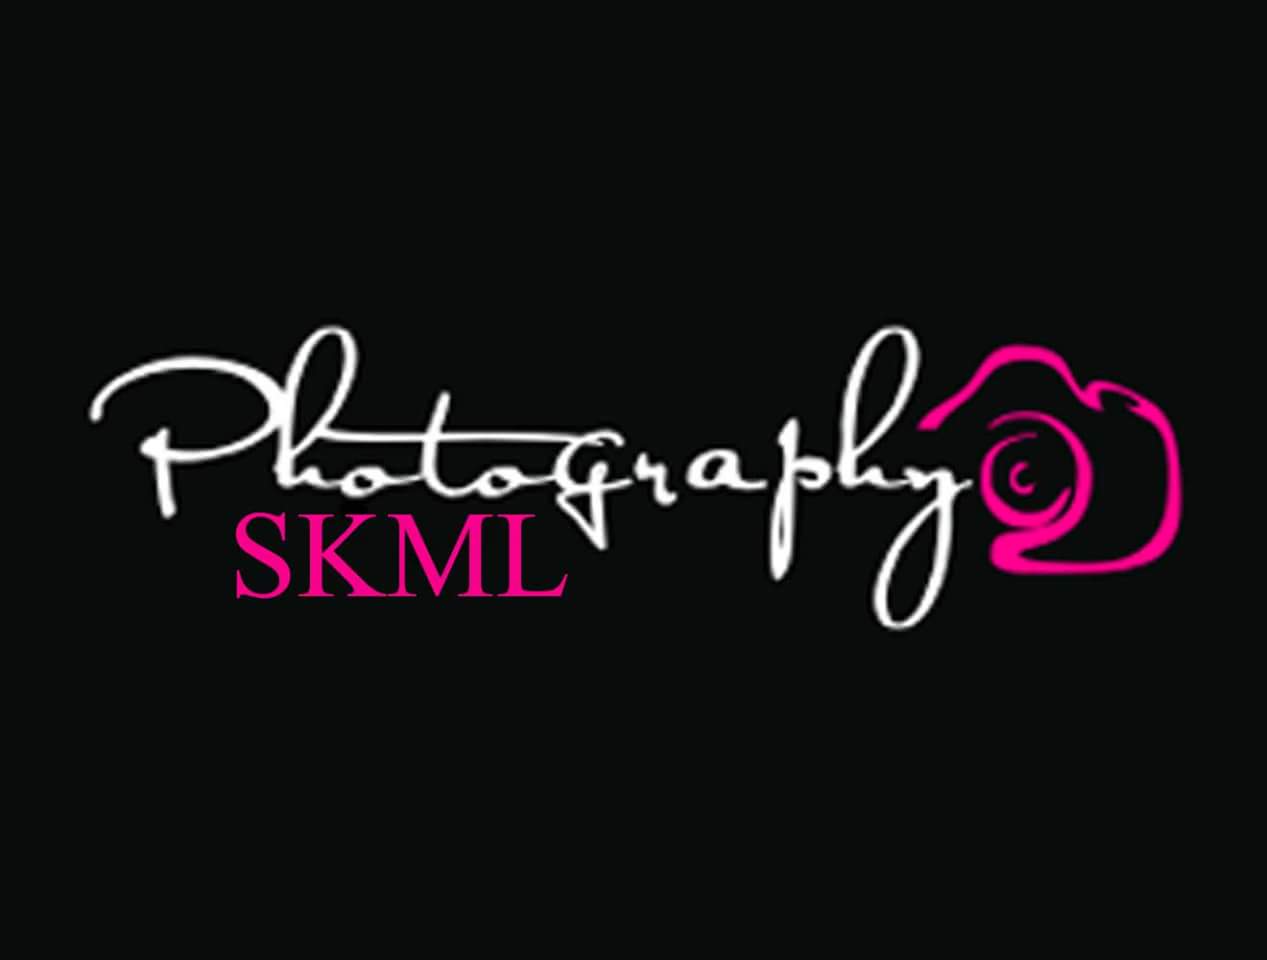 SKML Photography